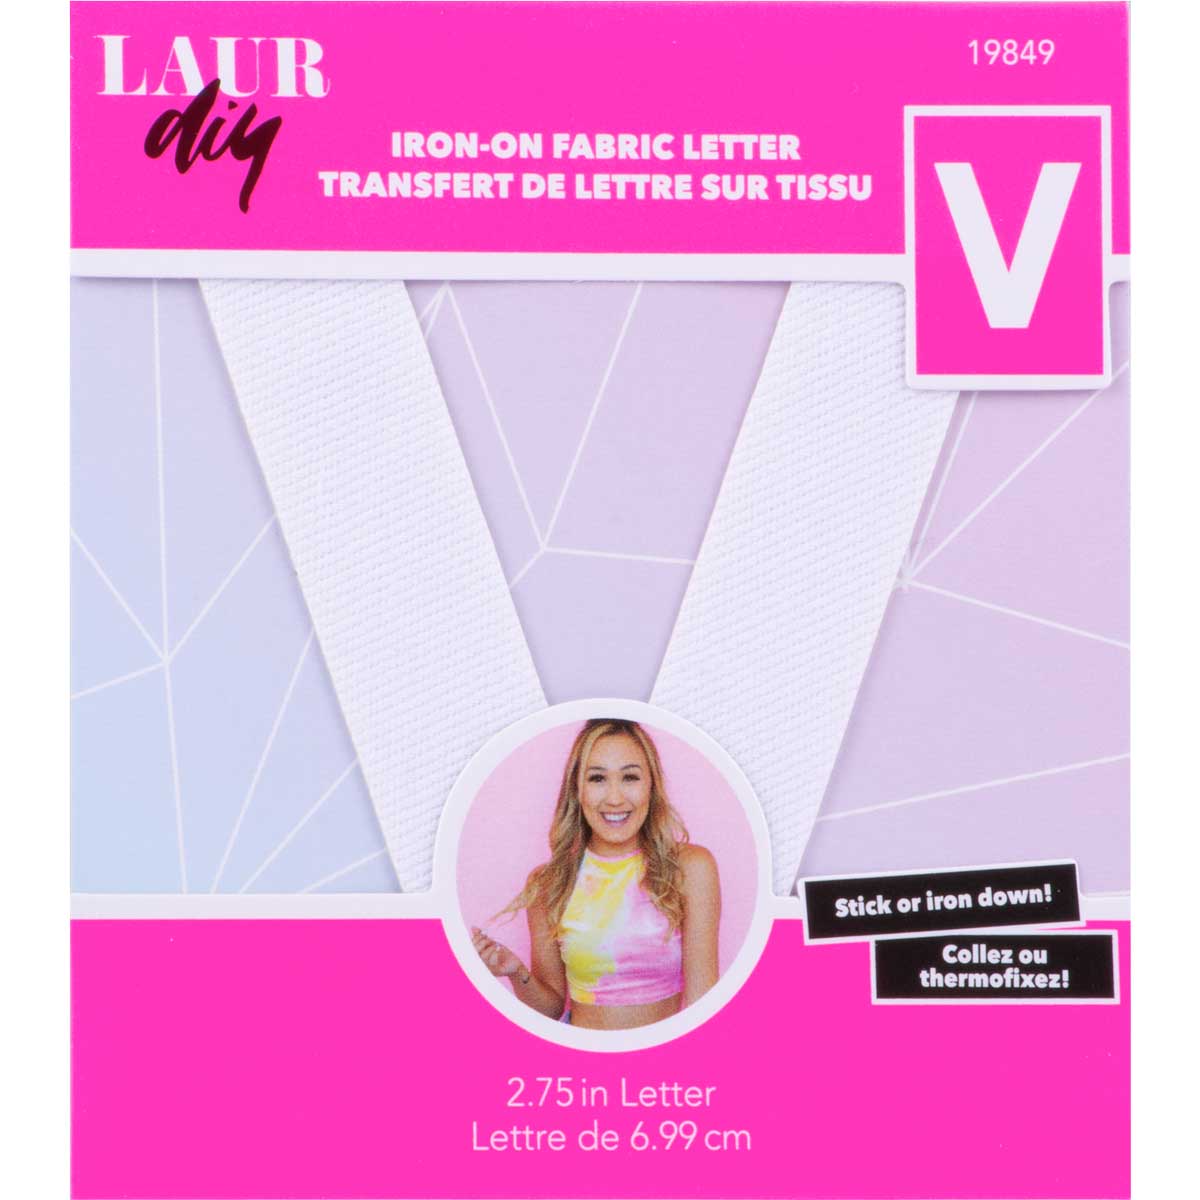 LaurDIY ® Iron-on Fabric Letters - V - 19849